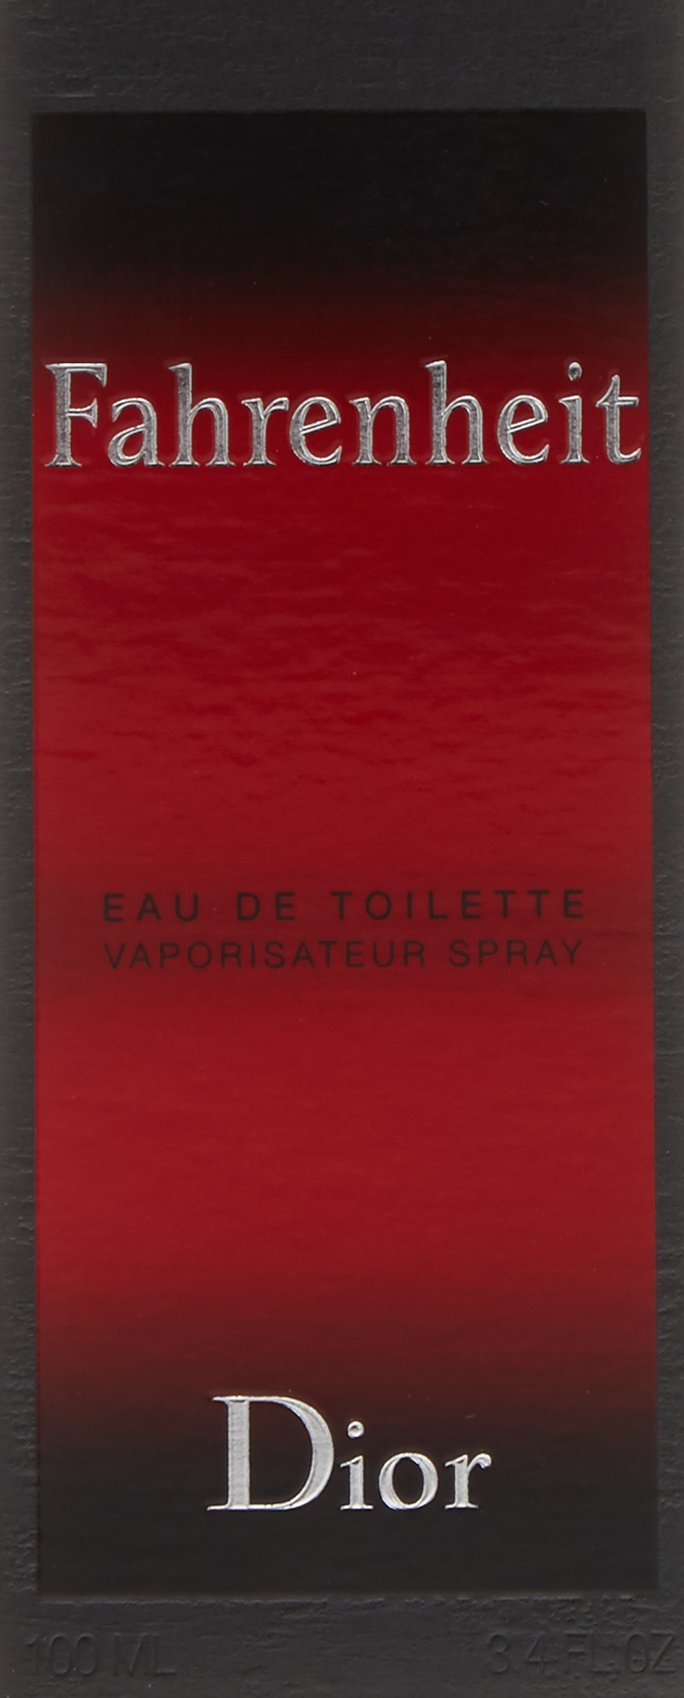 Fahrenheit By Christian Dior For Men. Eau De Toilette Spray Red, 3.4 Oz.